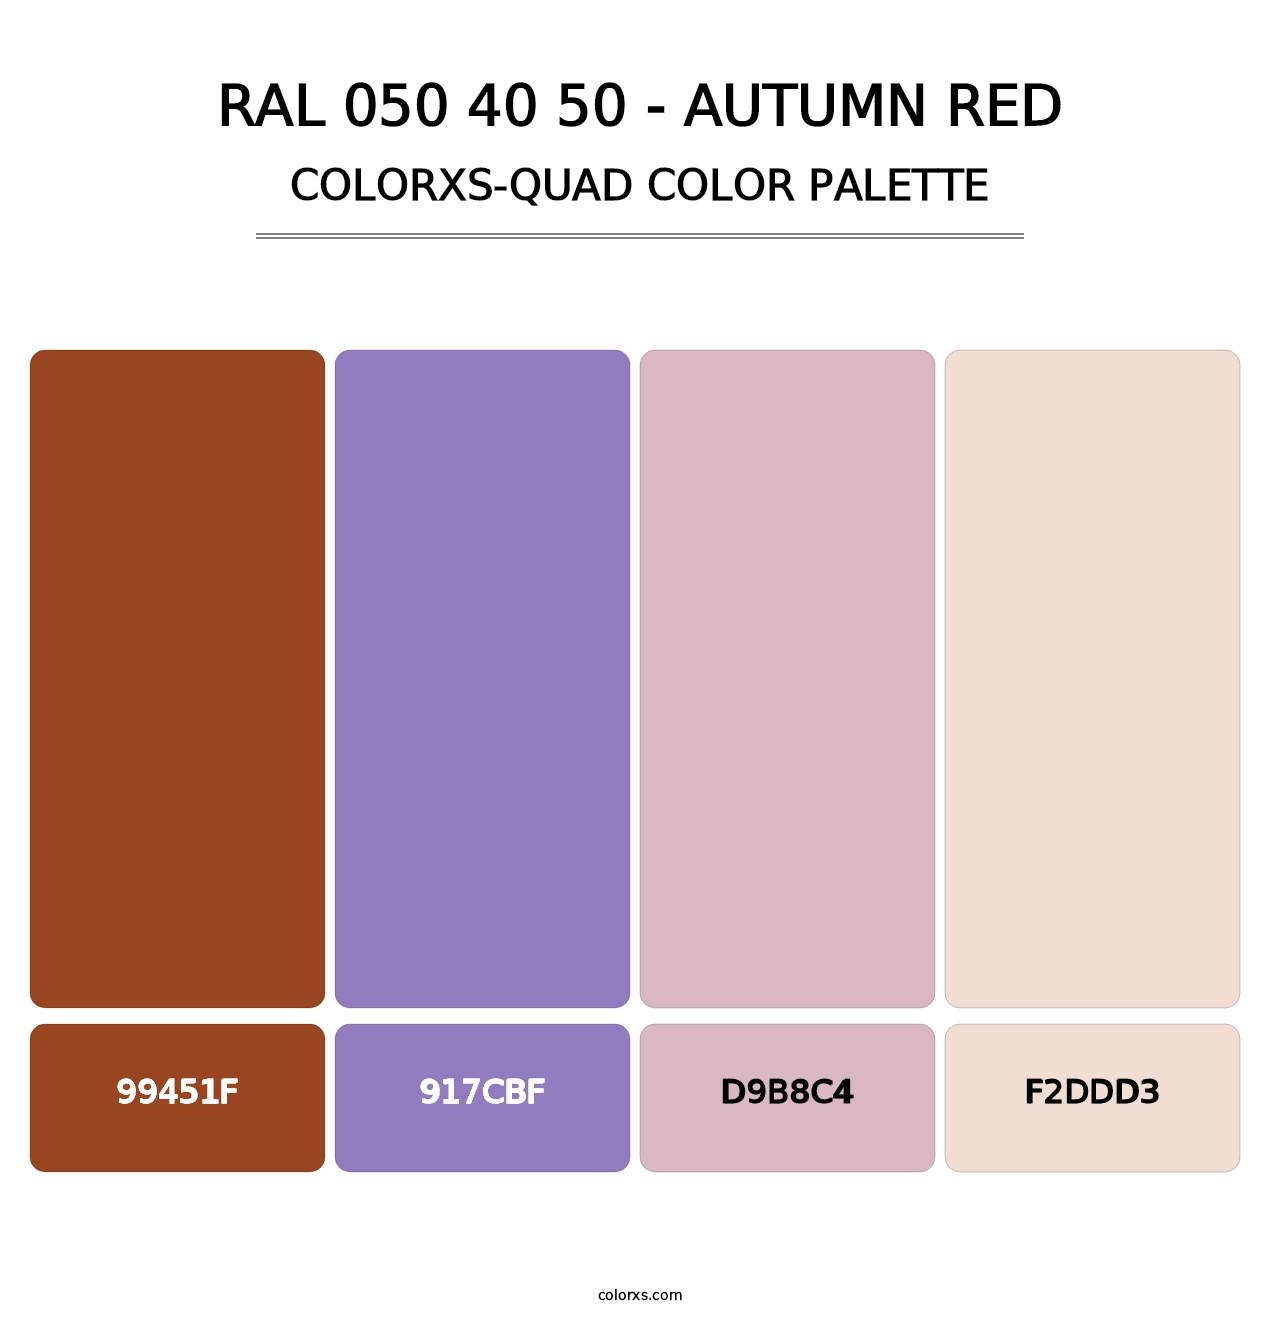 RAL 050 40 50 - Autumn Red - Colorxs Quad Palette